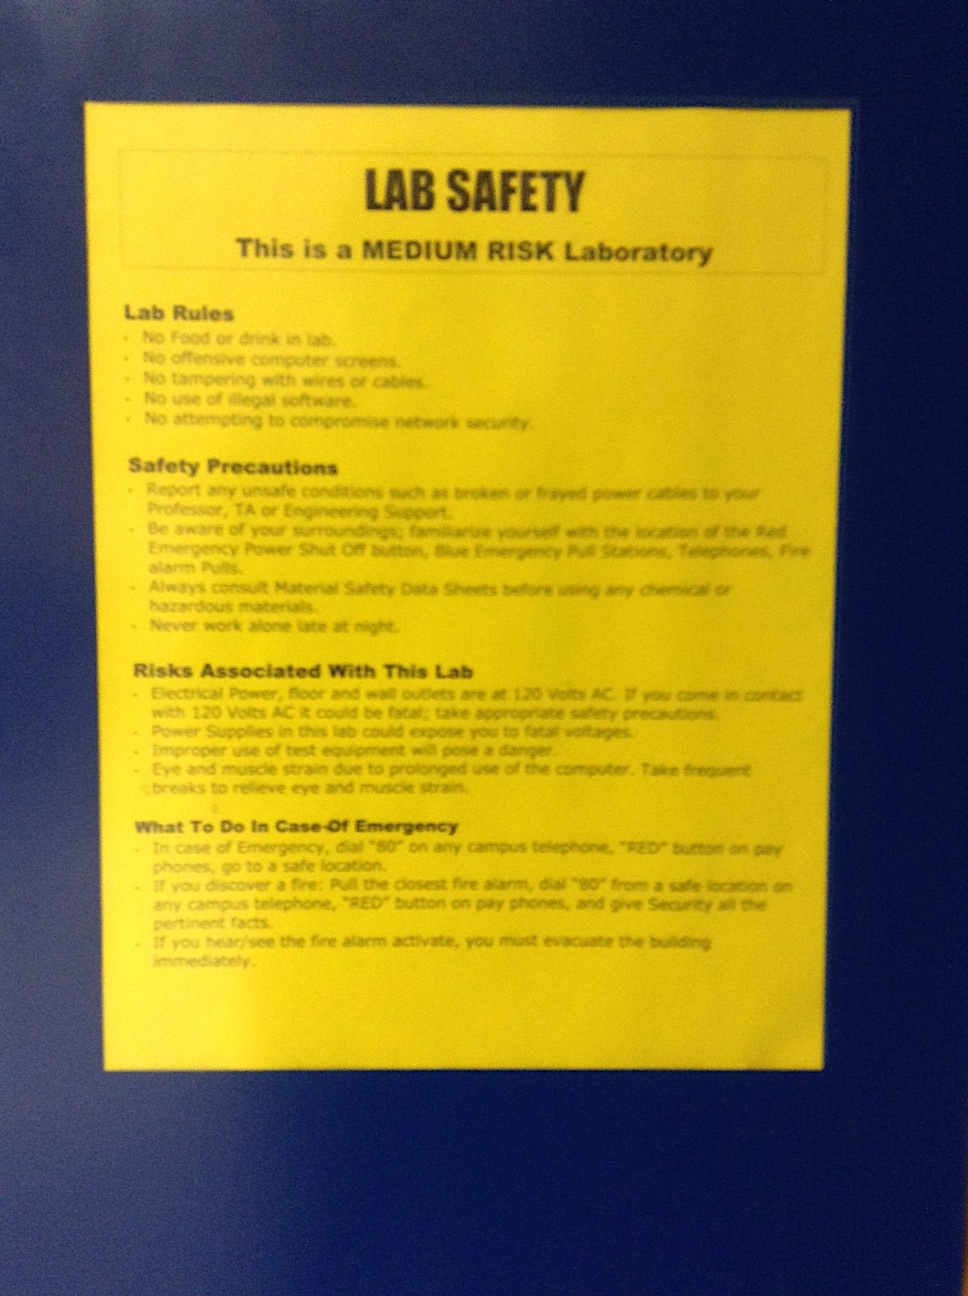 Medium Risk Lab Poster image (yellow)